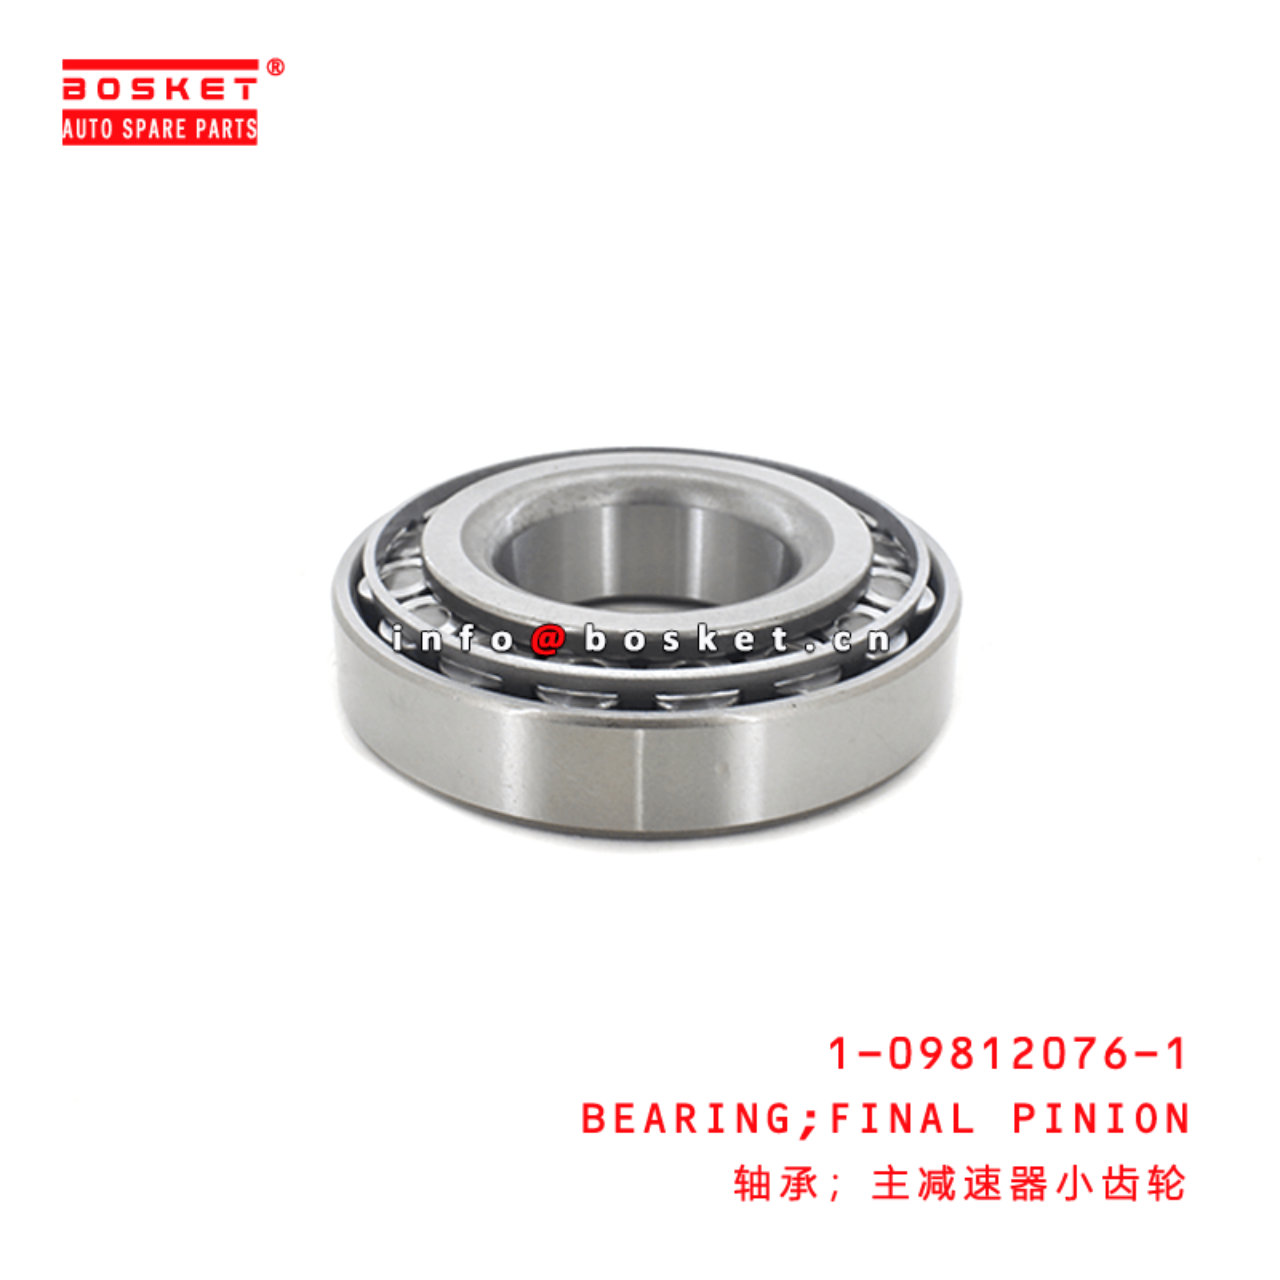 1-09812076-1 Final Pinion Bearing 1098120761 Suitable for ISUZU 